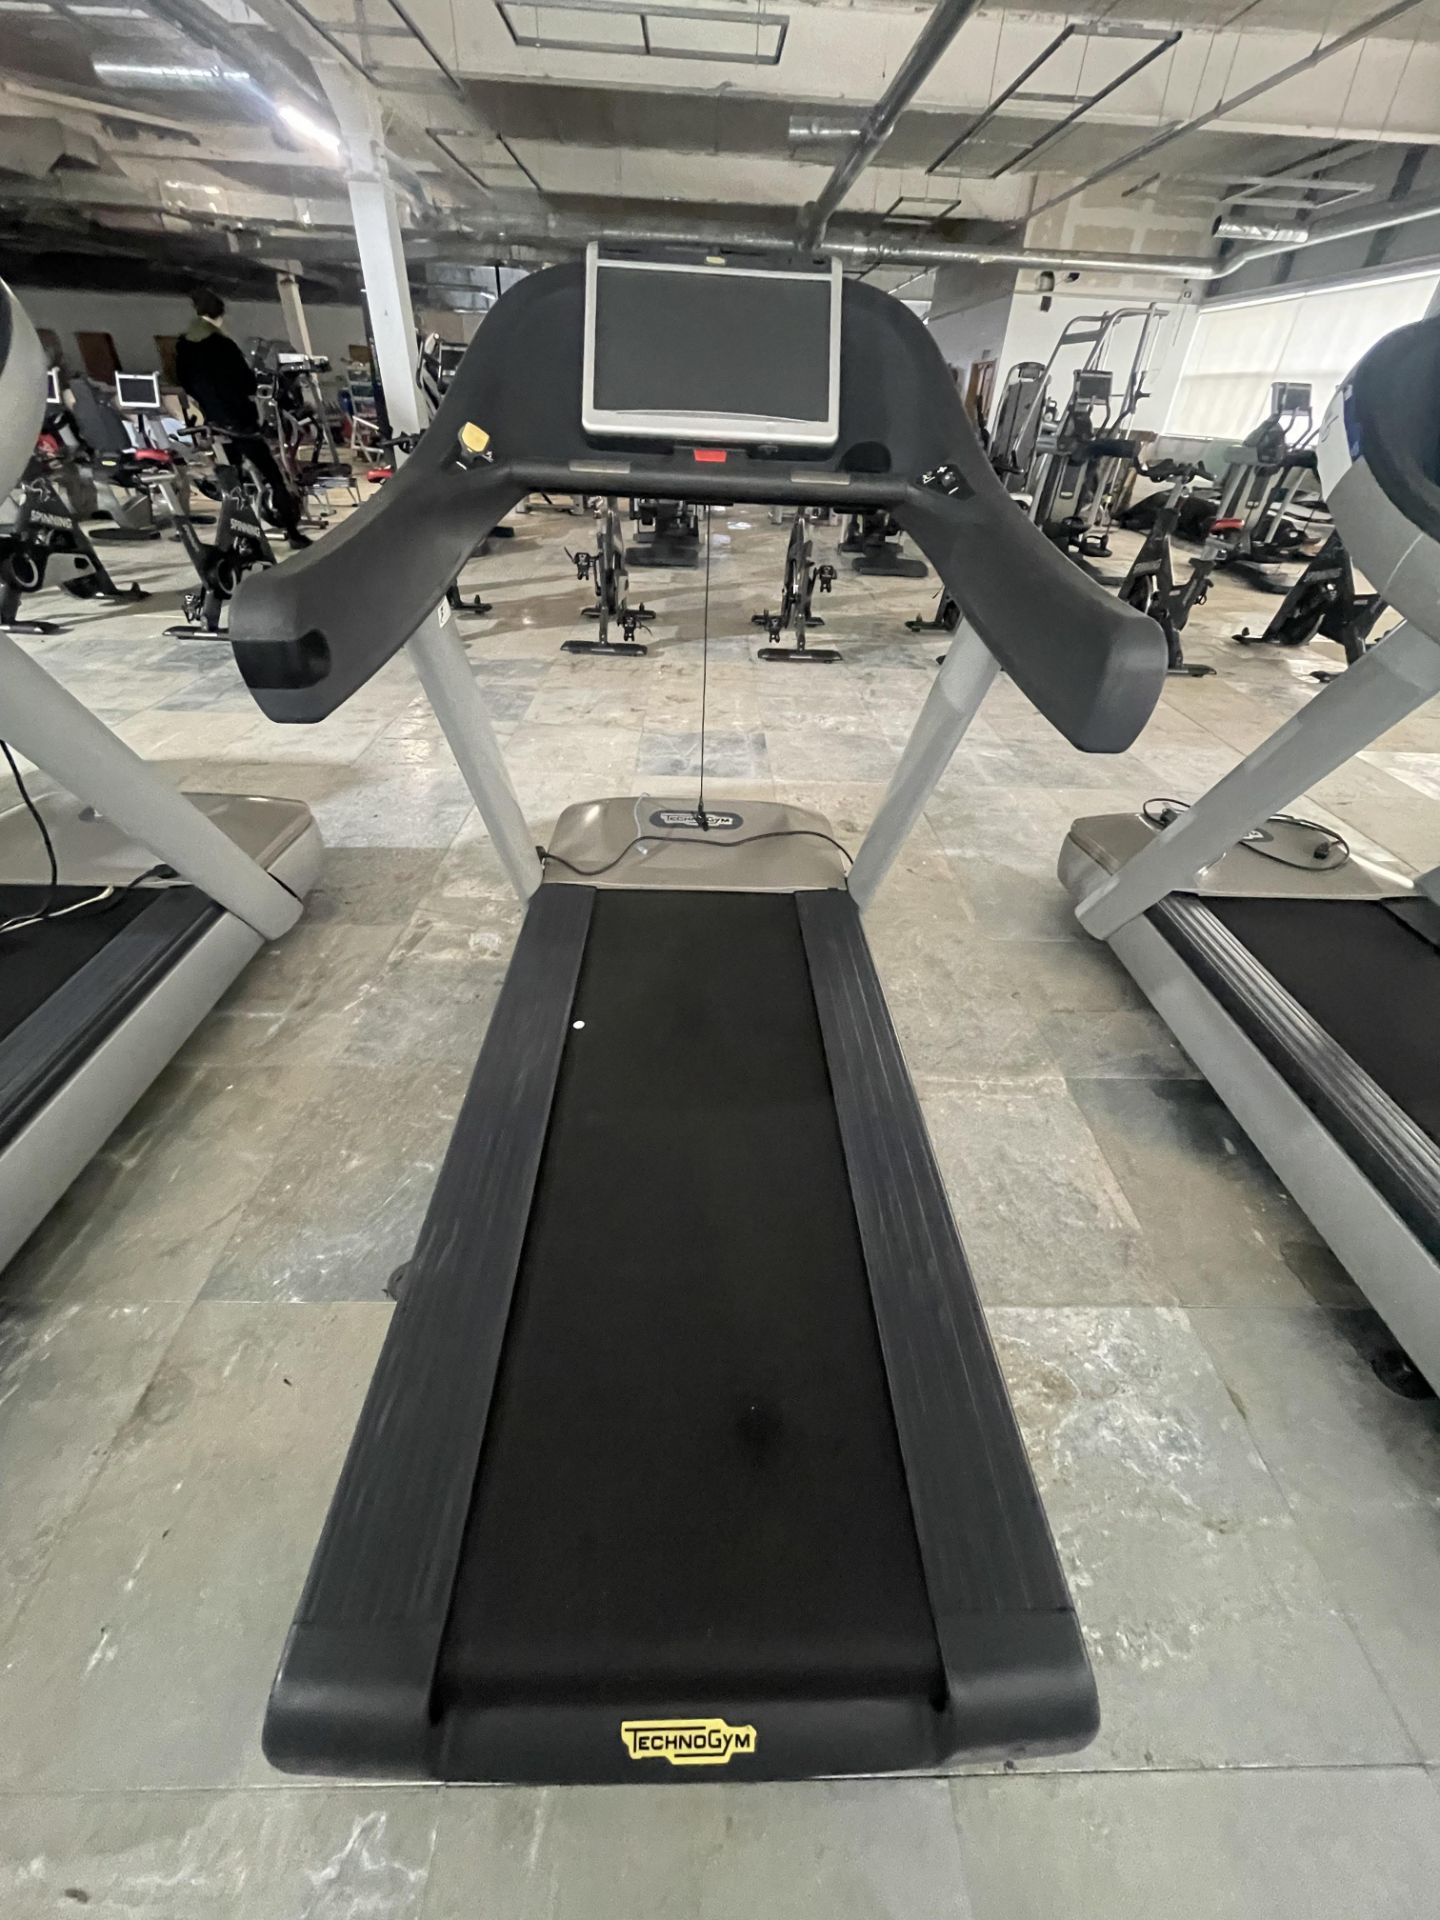 Technogym Treadmill - Image 5 of 6